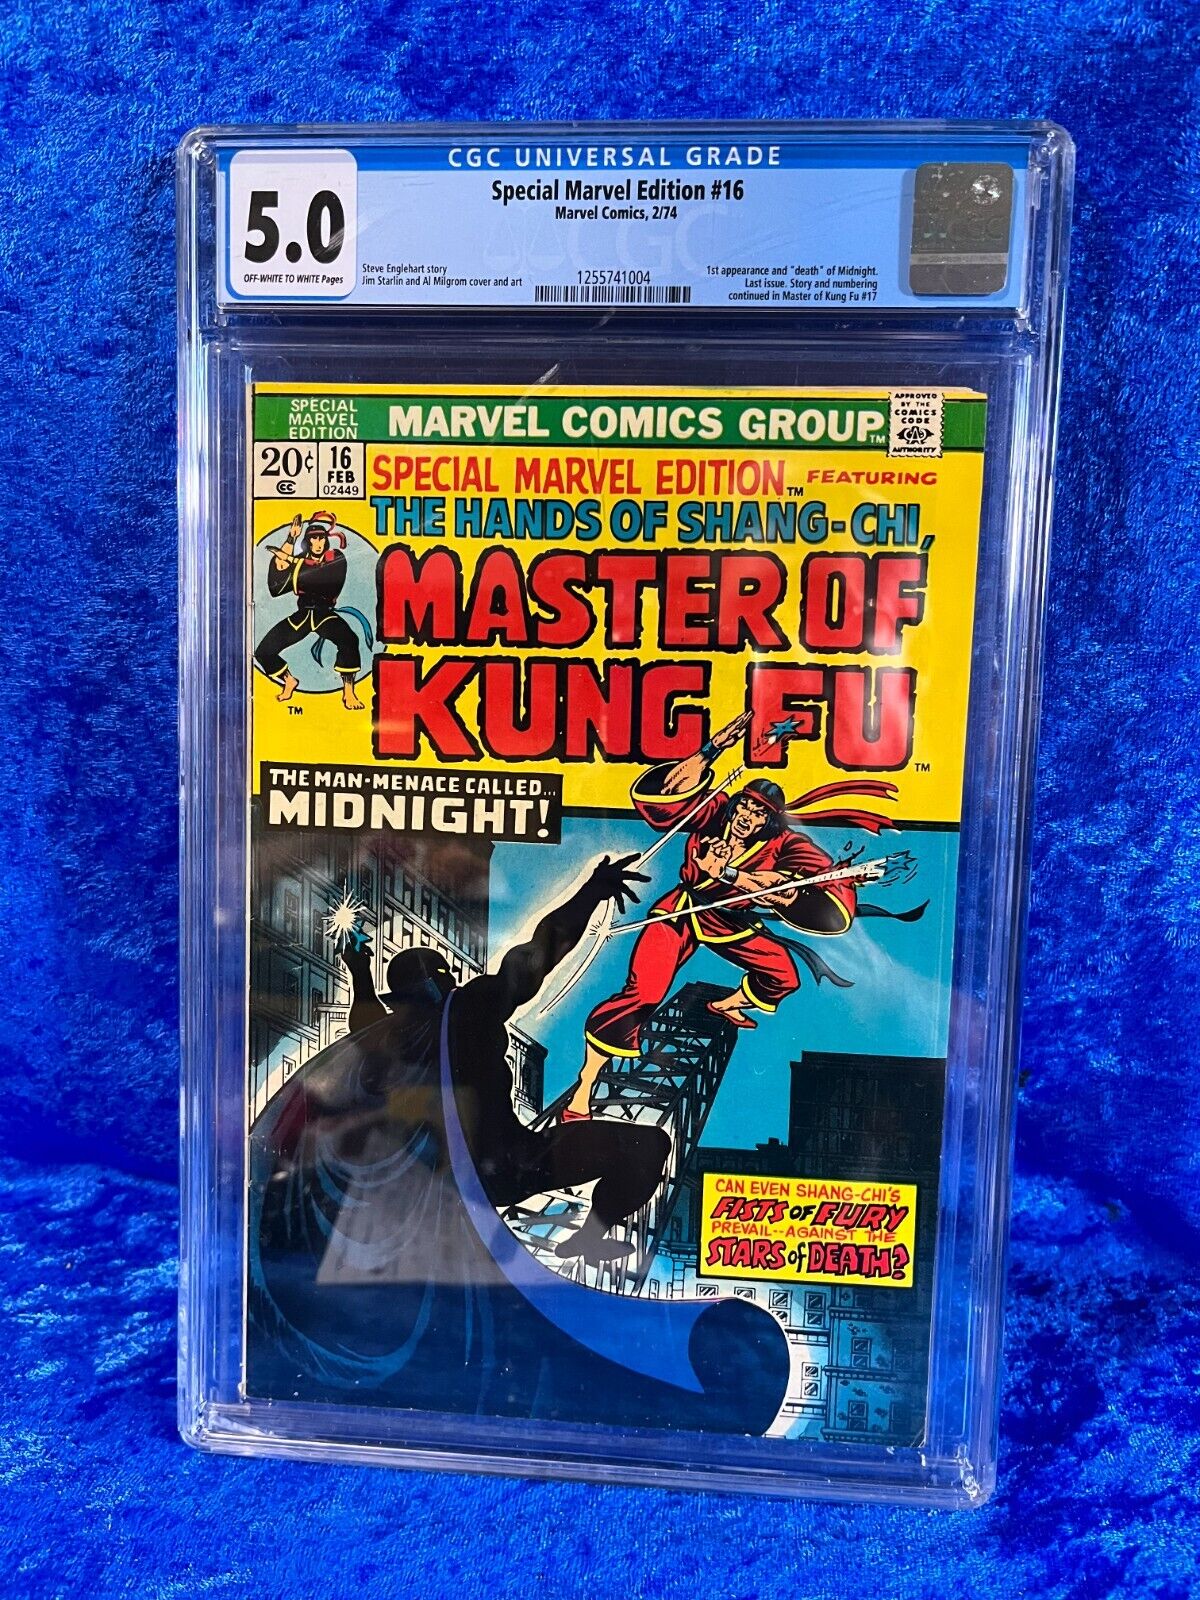 1973 Special Marvel Edition #16 Master of Kung Fu 5.0